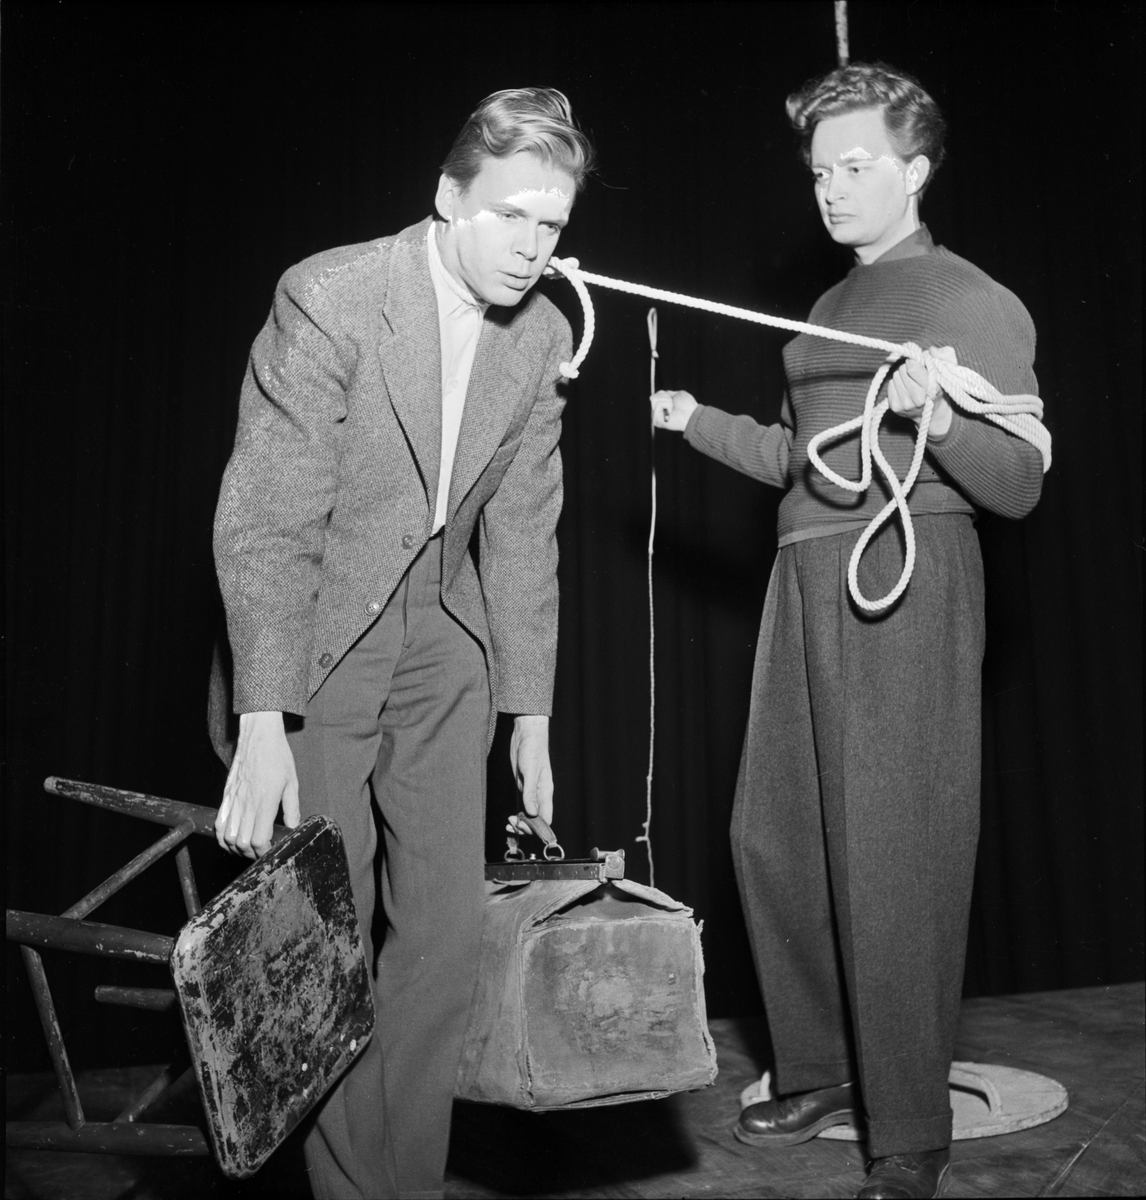 Teaterproduktion, Uppsala 1954